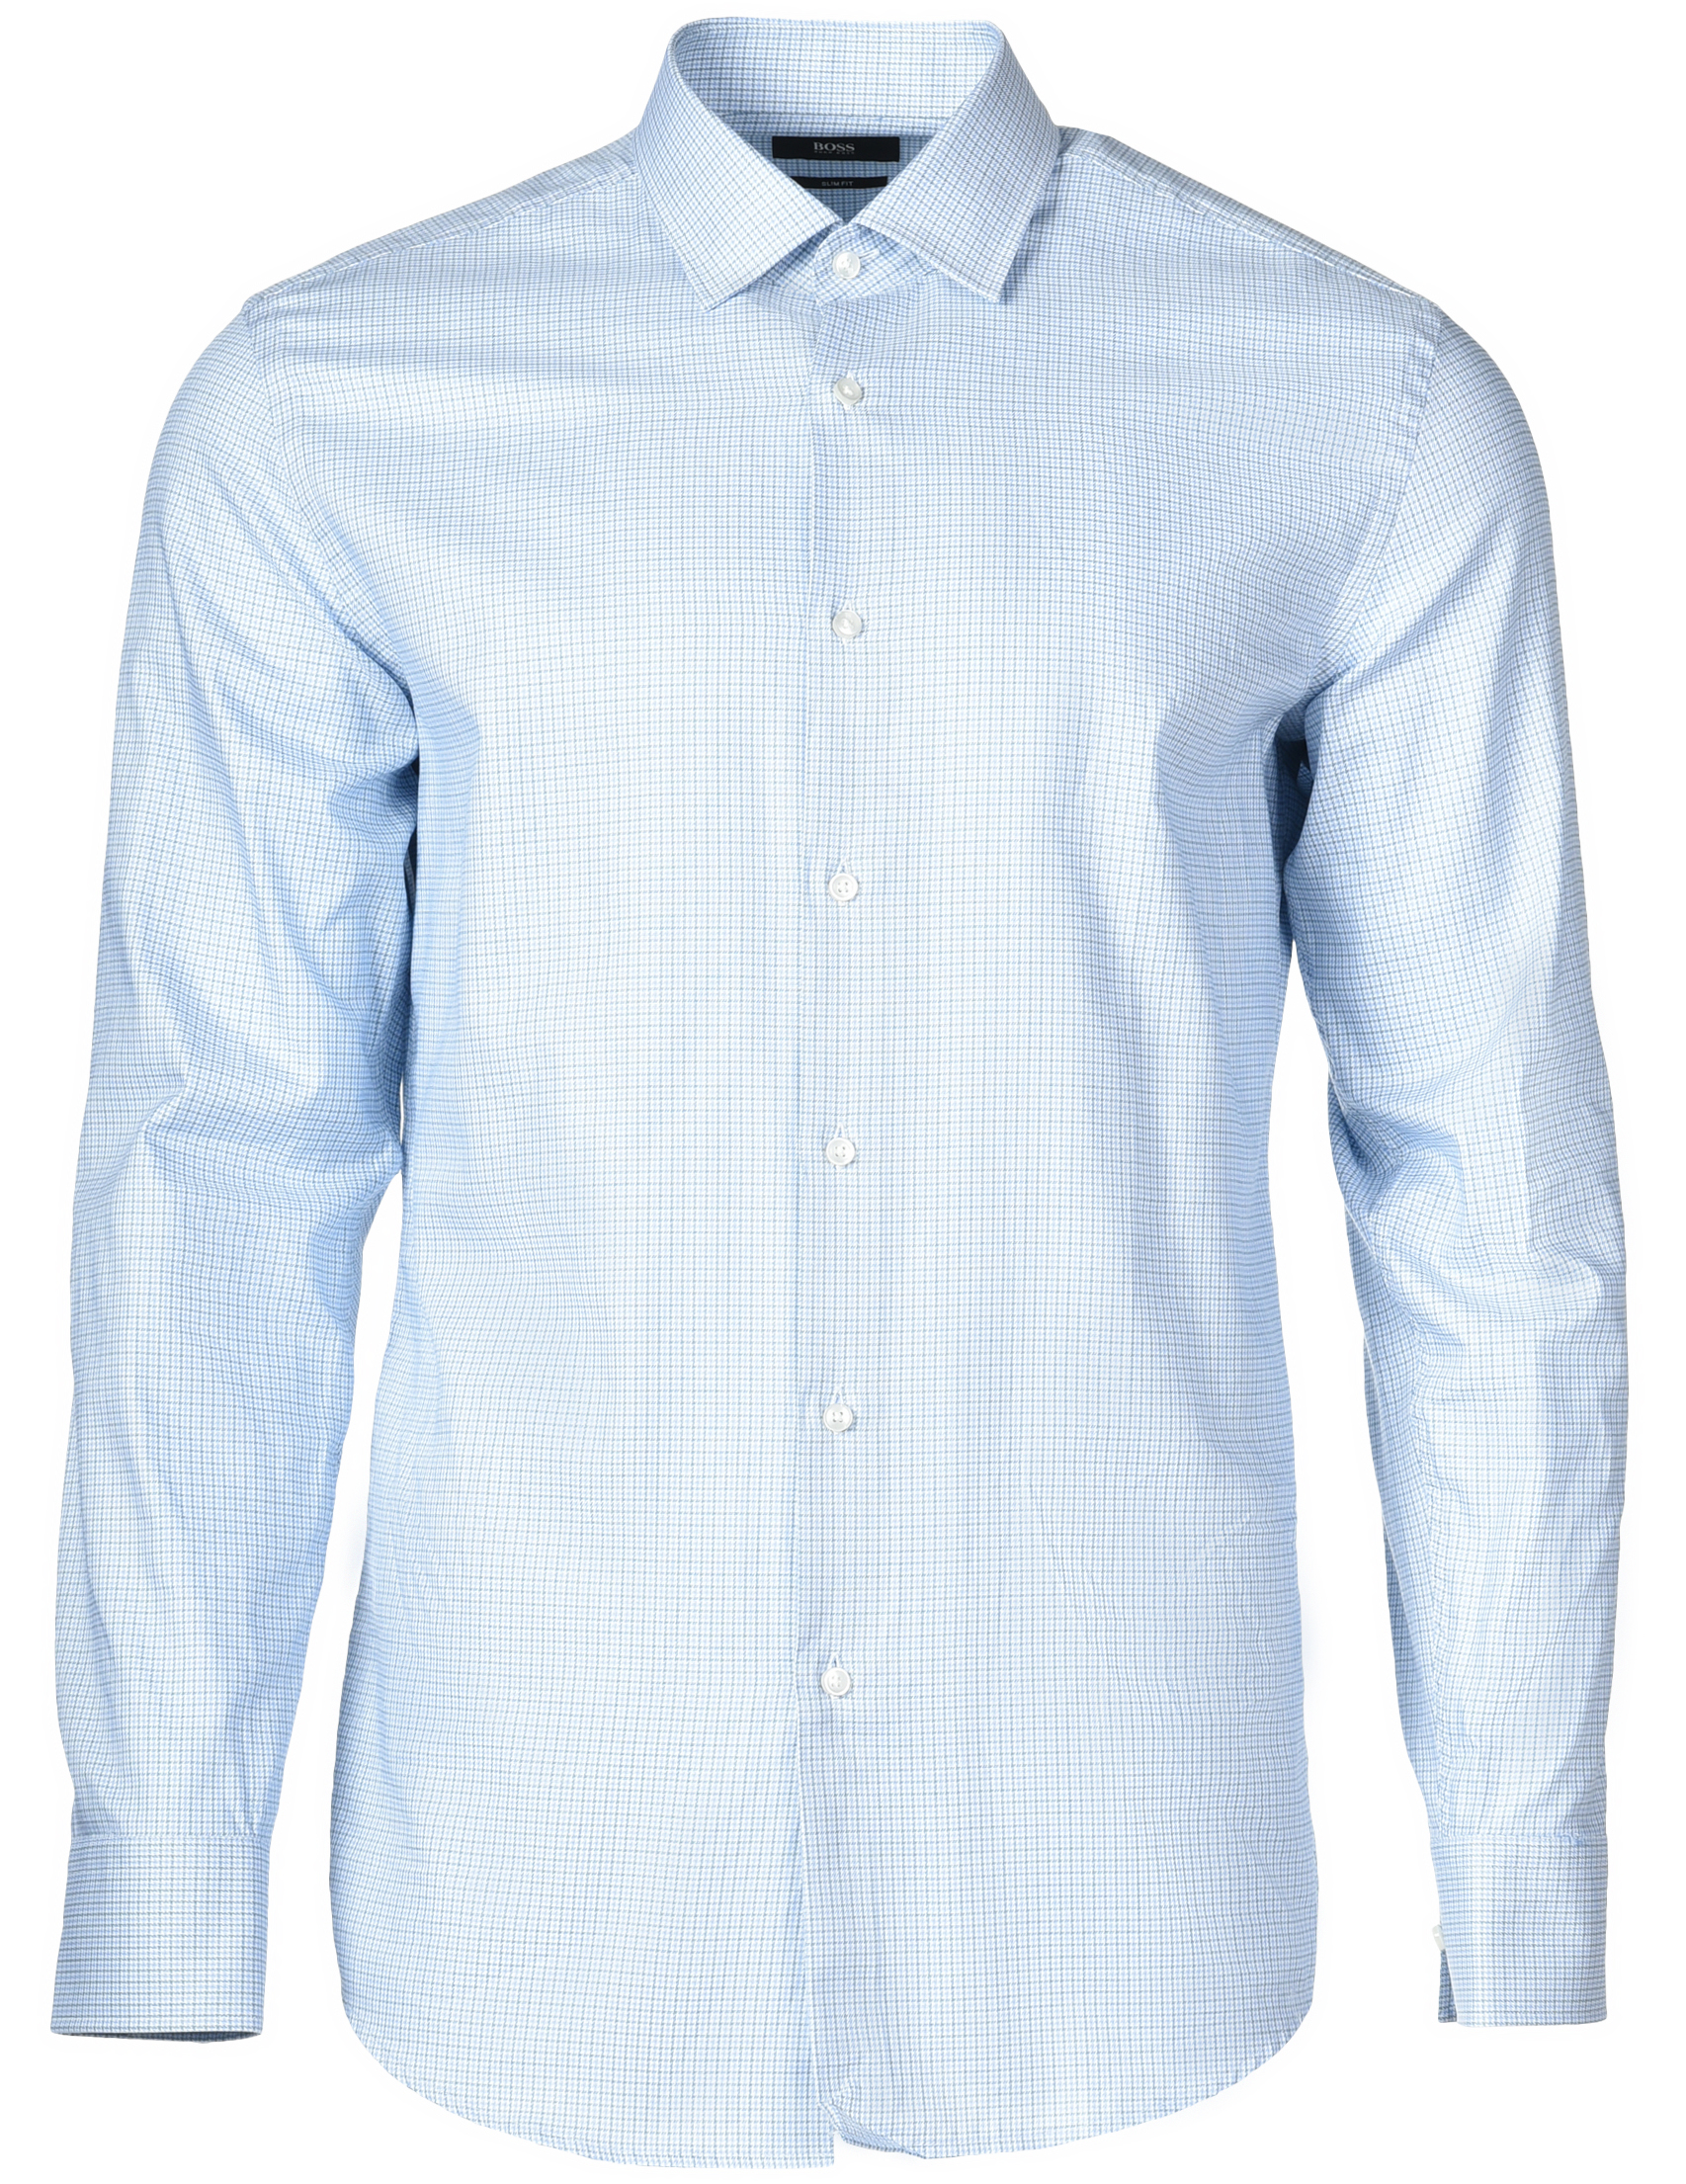 Мужская рубашка HUGO BOSS 50393729-446_blue